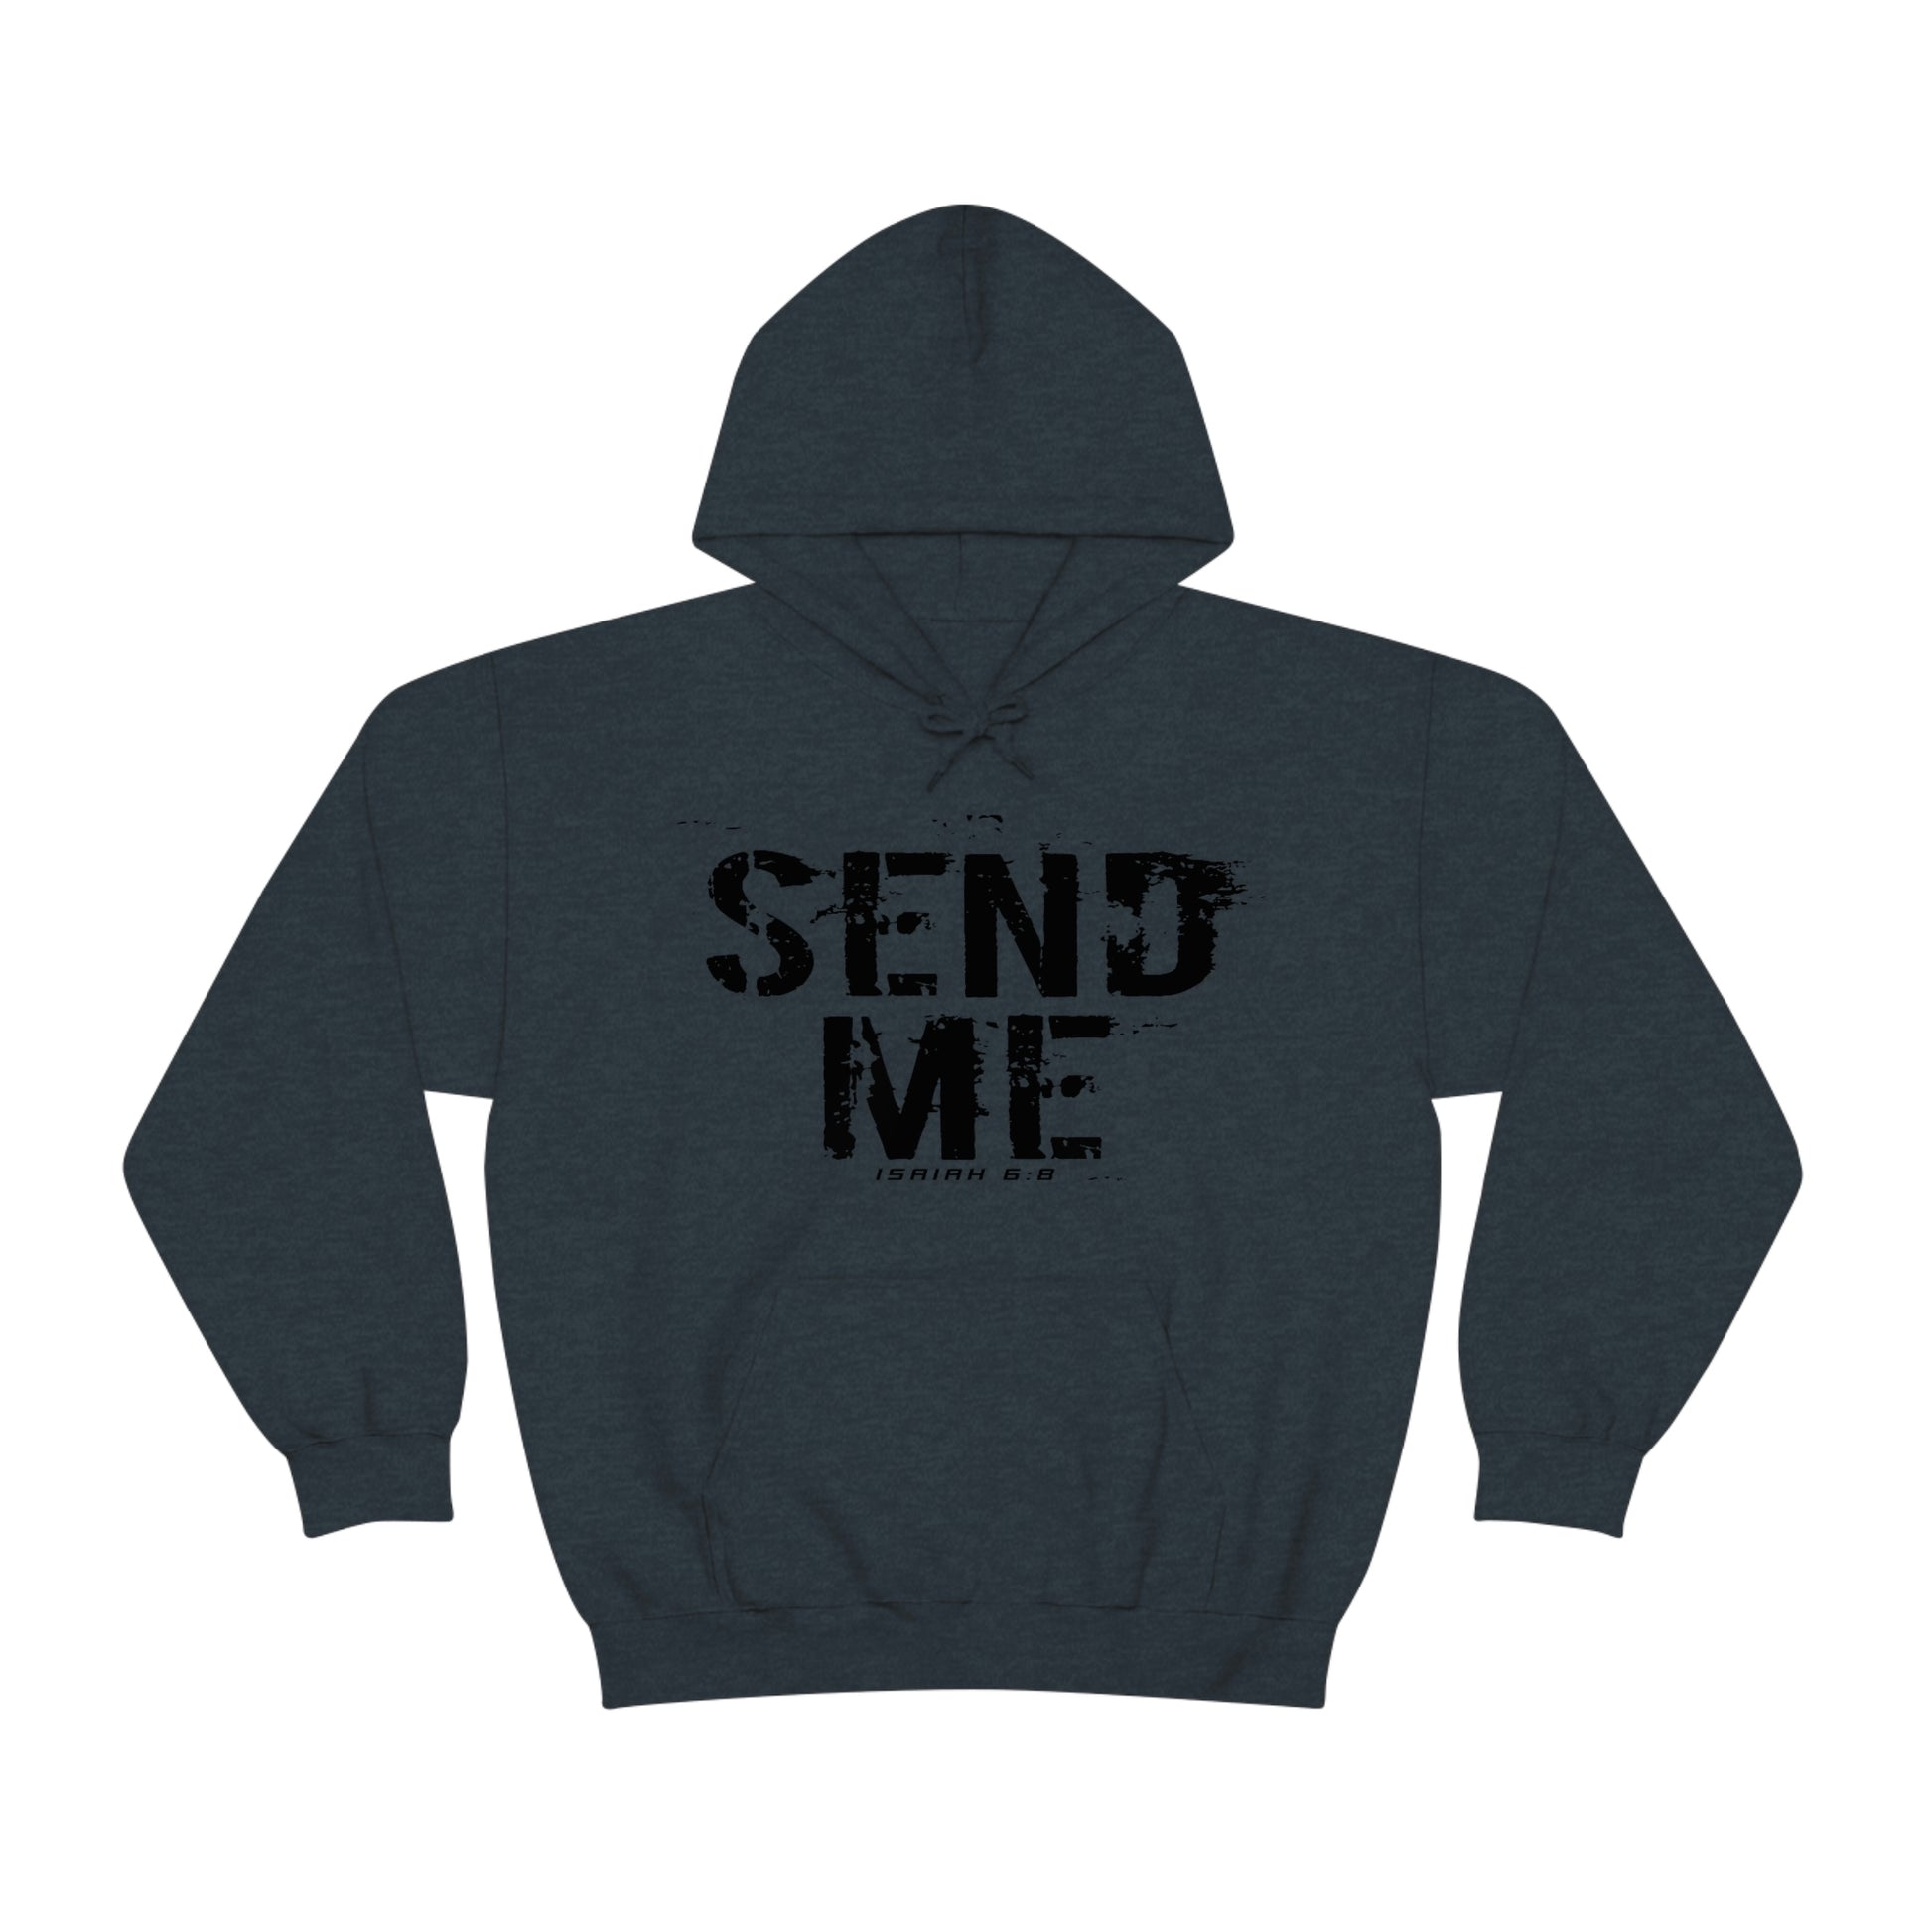 Heather Navy Blue sweatshirt with black "Send Me" Isaiah 6:8 bible verse text printed on it by Sanctus Servo.